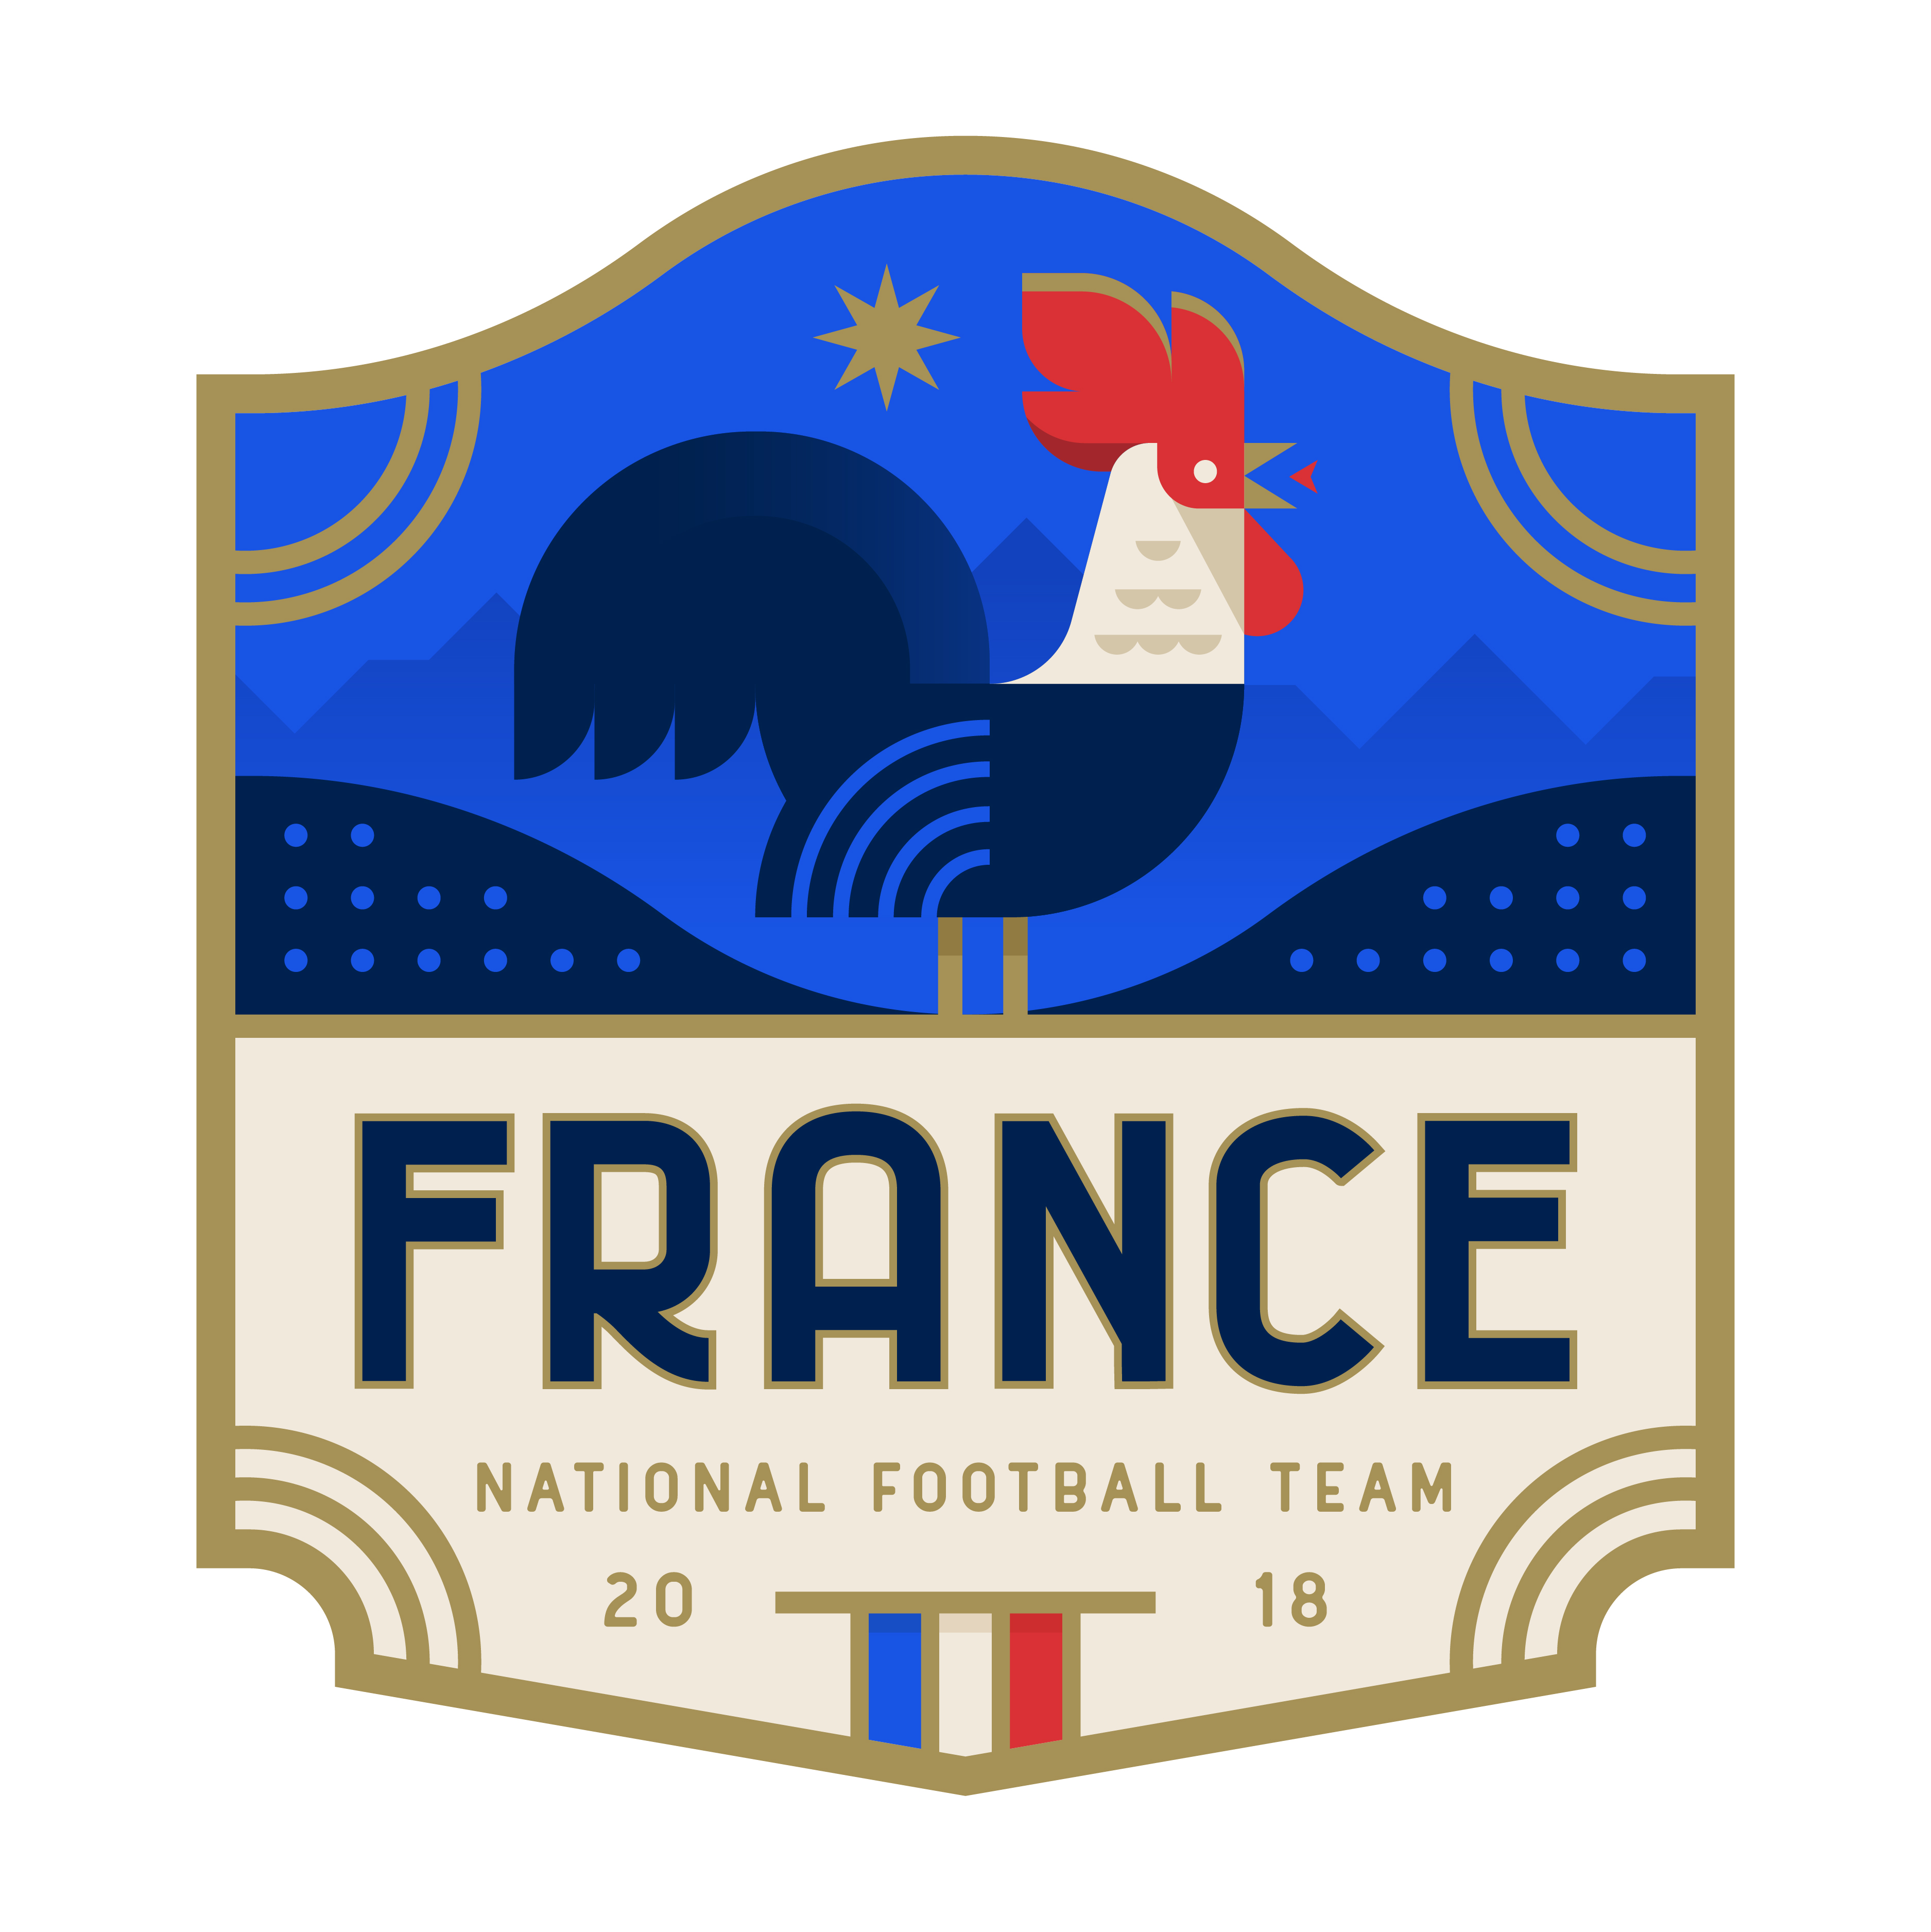 France National Team logo design by logo designer Trey Ingram for your inspiration and for the worlds largest logo competition